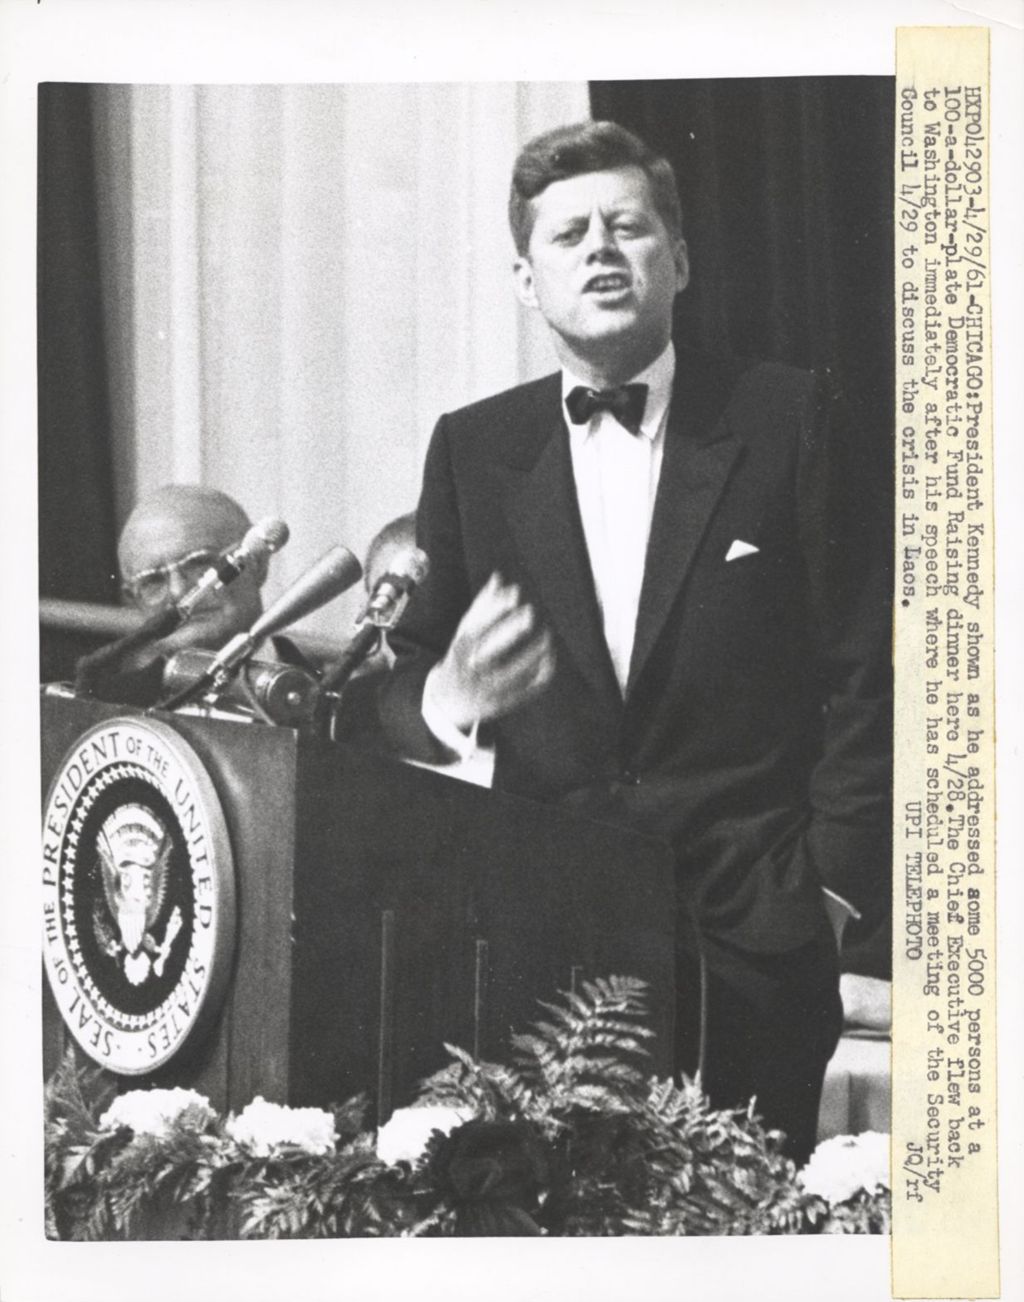 Miniature of John F. Kennedy speaking at Democratic fundraising dinner